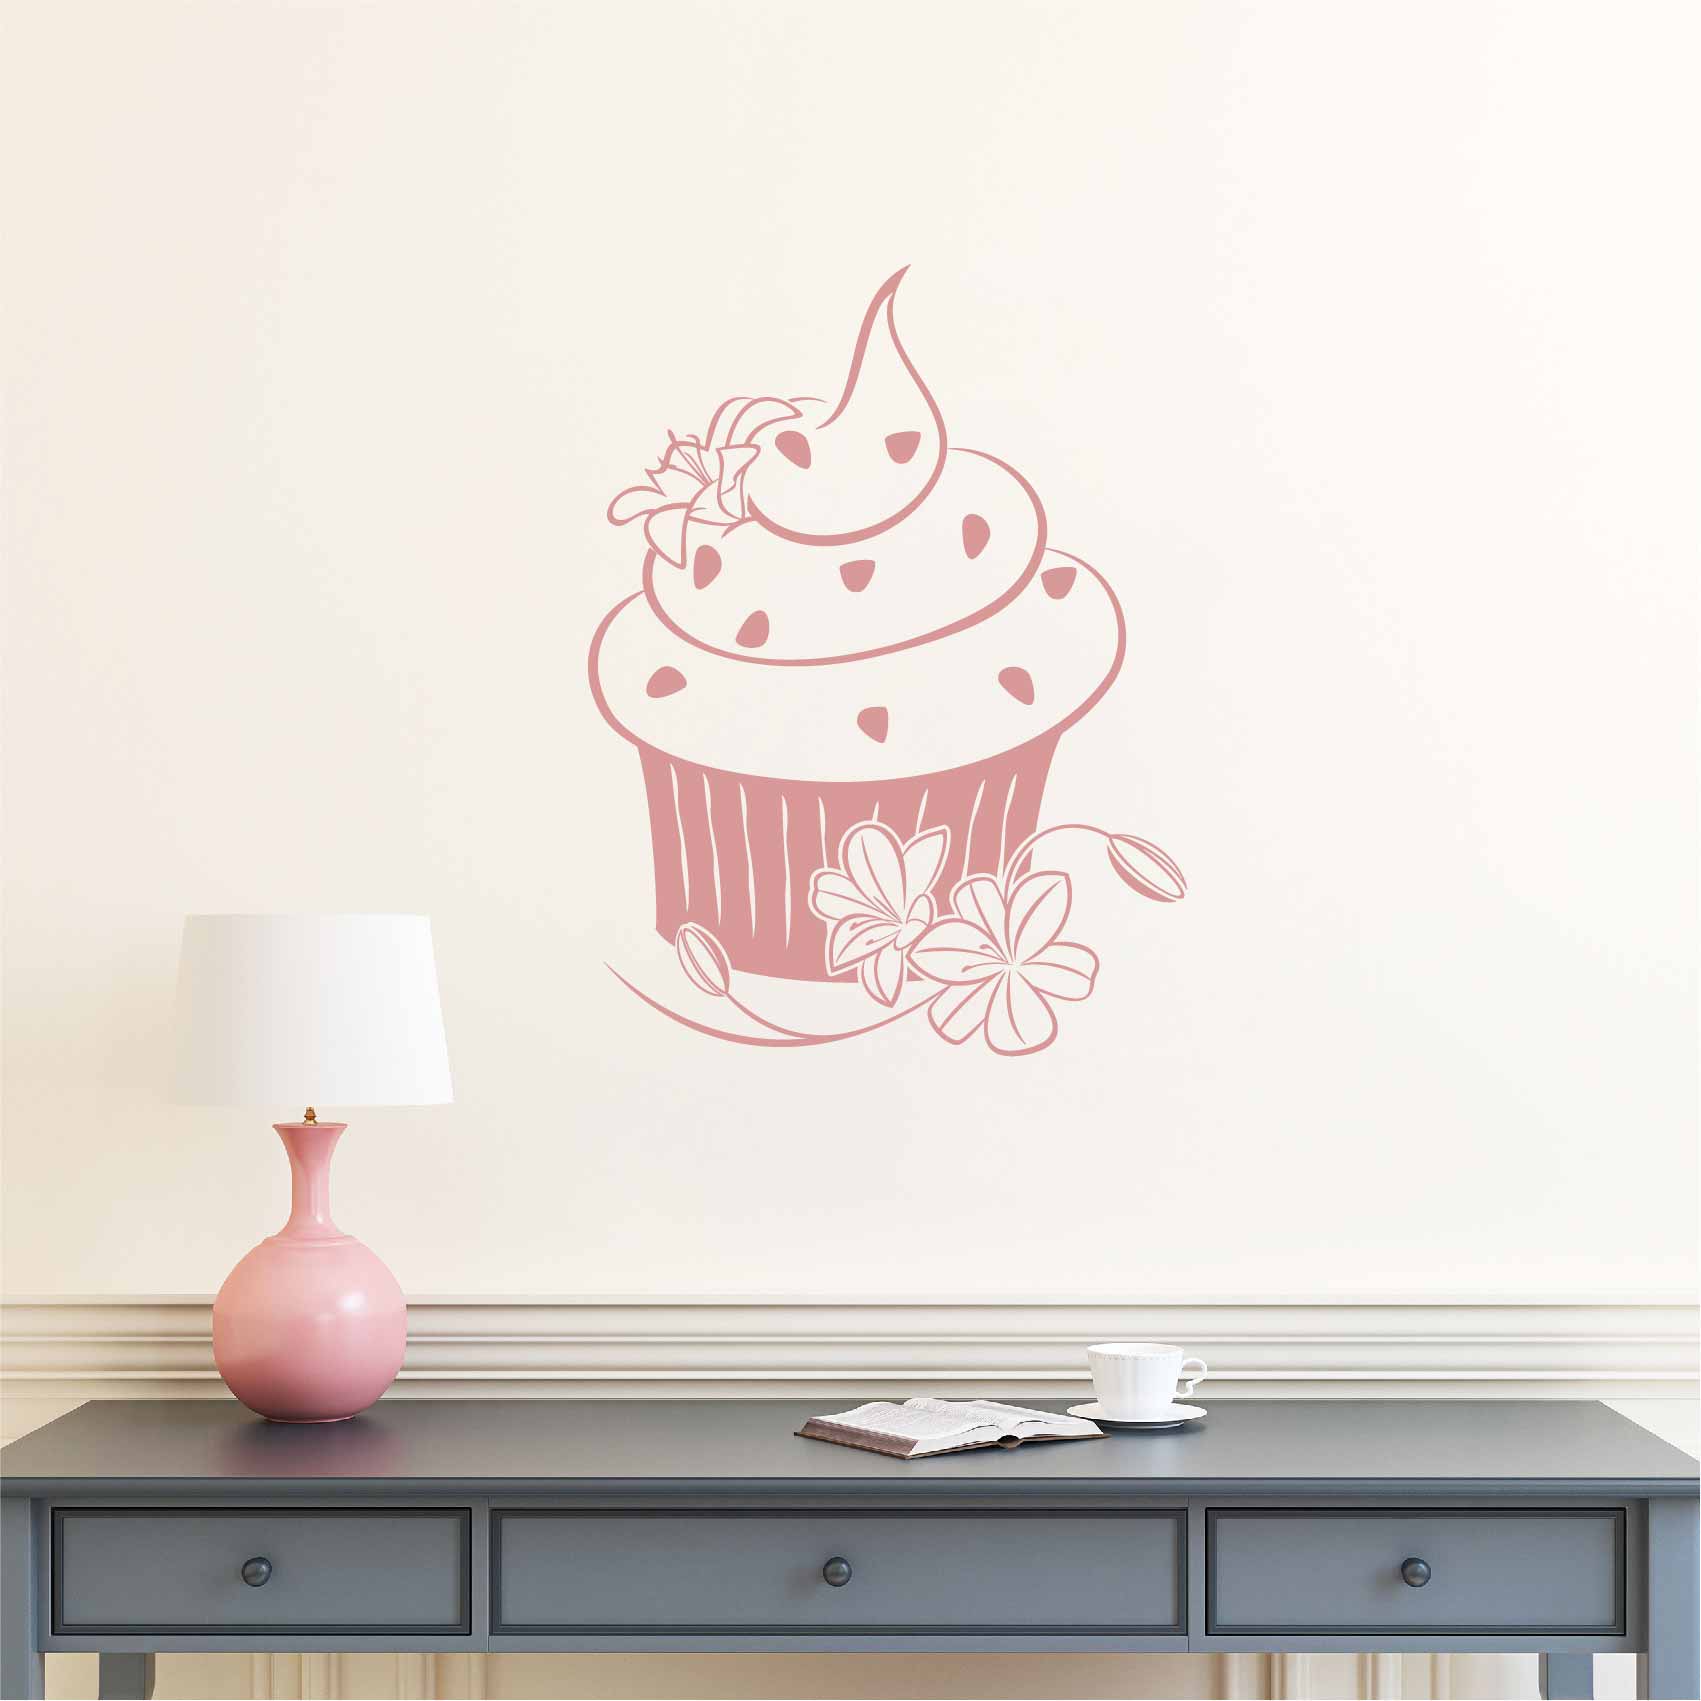 stickers-cupcake-fleur-ref22cupcake-autocollant-muraux-cuisine-salle-a-manger-salon-sticker-mural-deco-gateau-cupcakes-gateaux